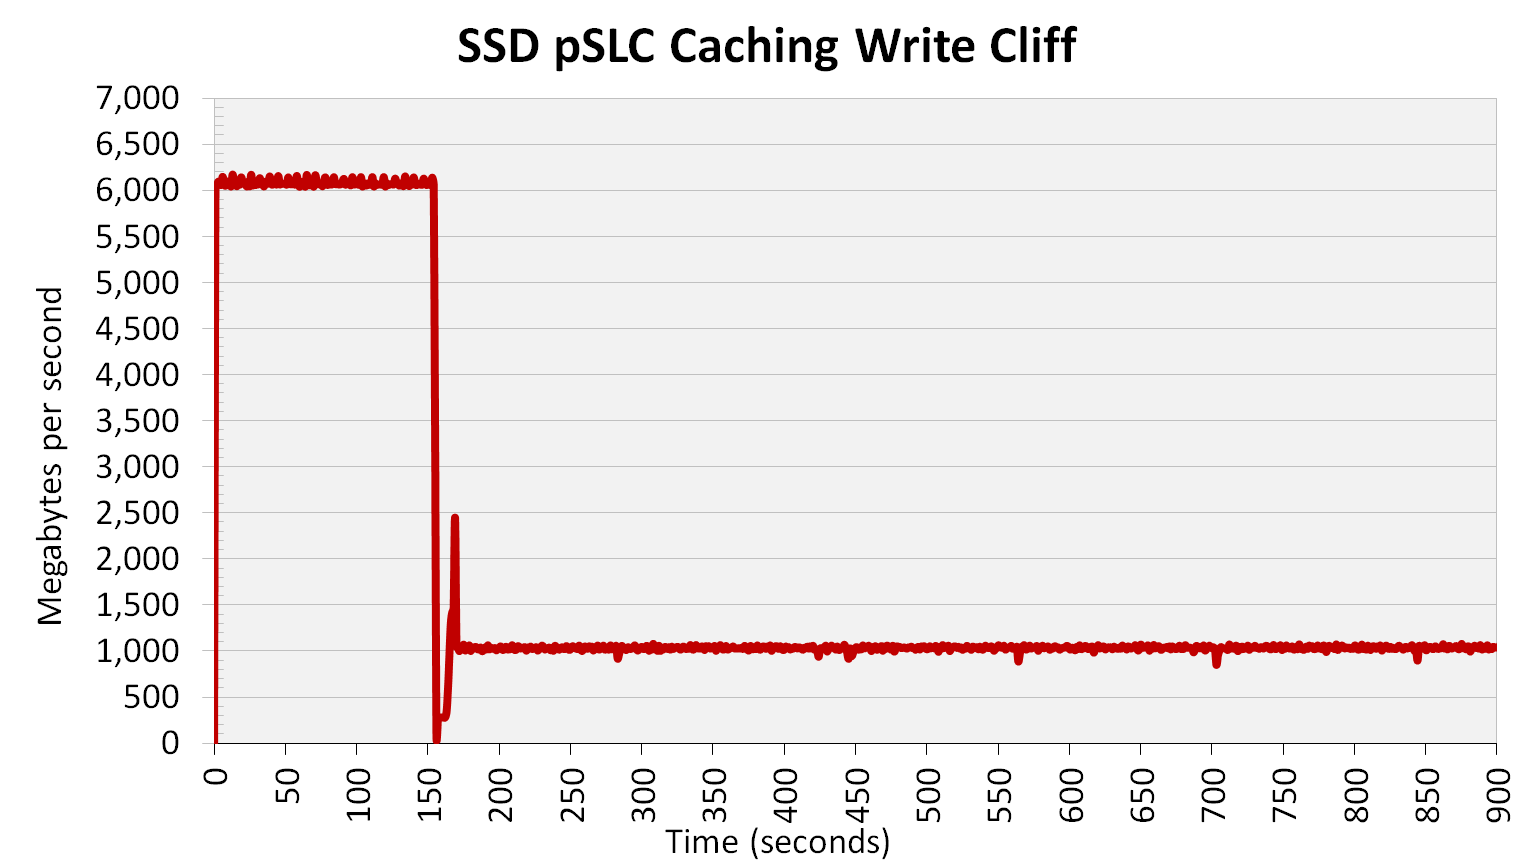 Demystifying SSD pSLC Caching